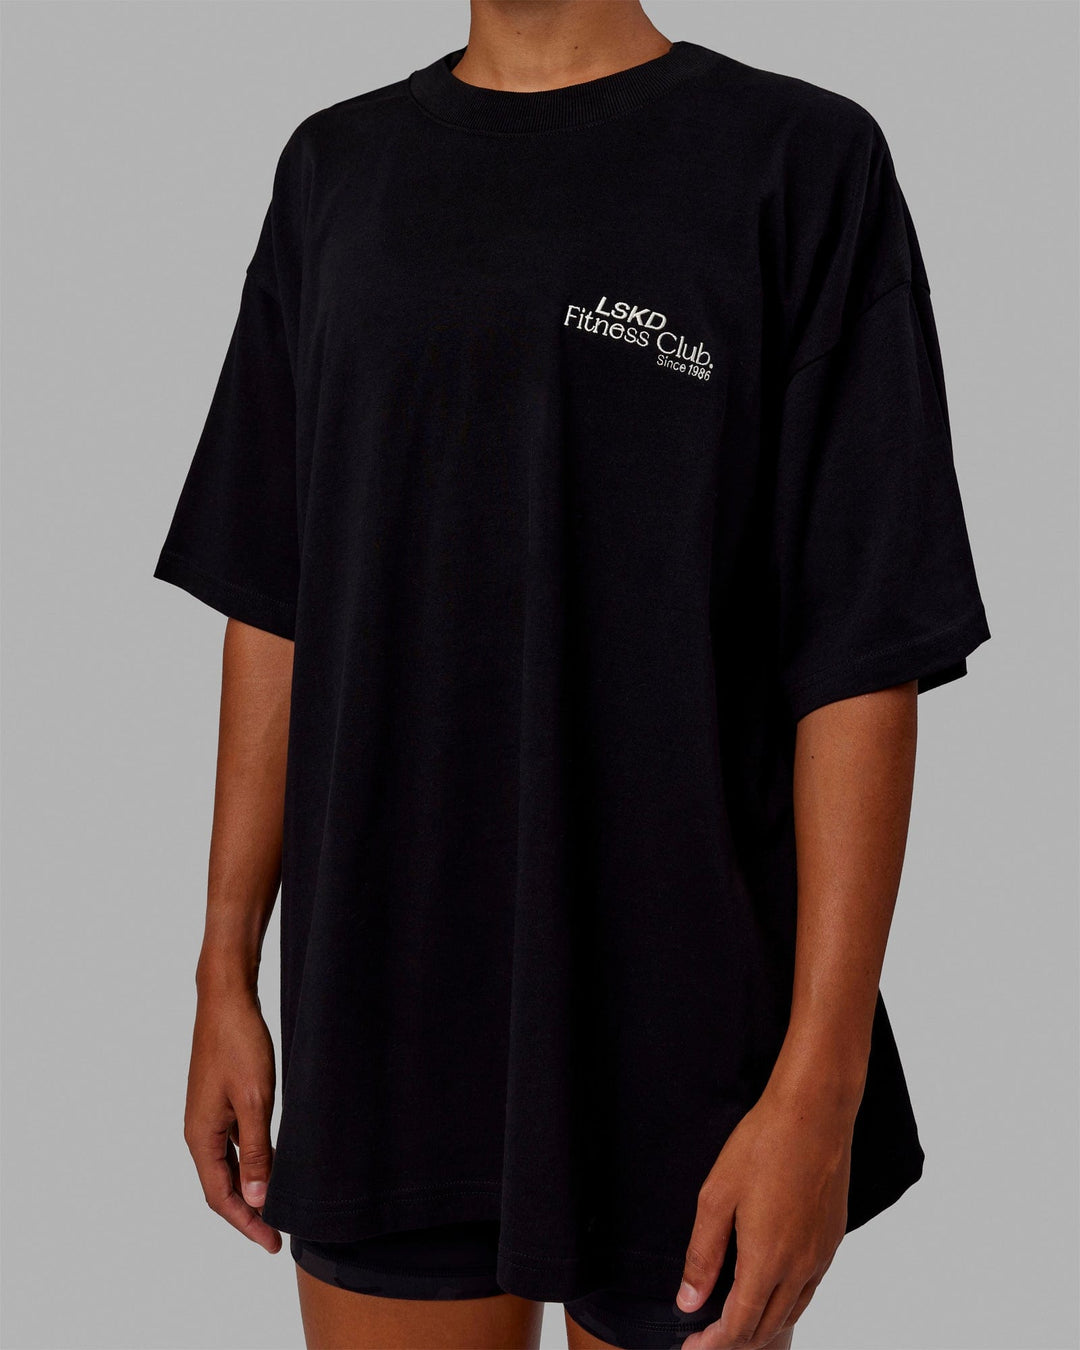 Woman wearing Unisex Fitness Club Heavyweight Tee Oversize - Black-Off White